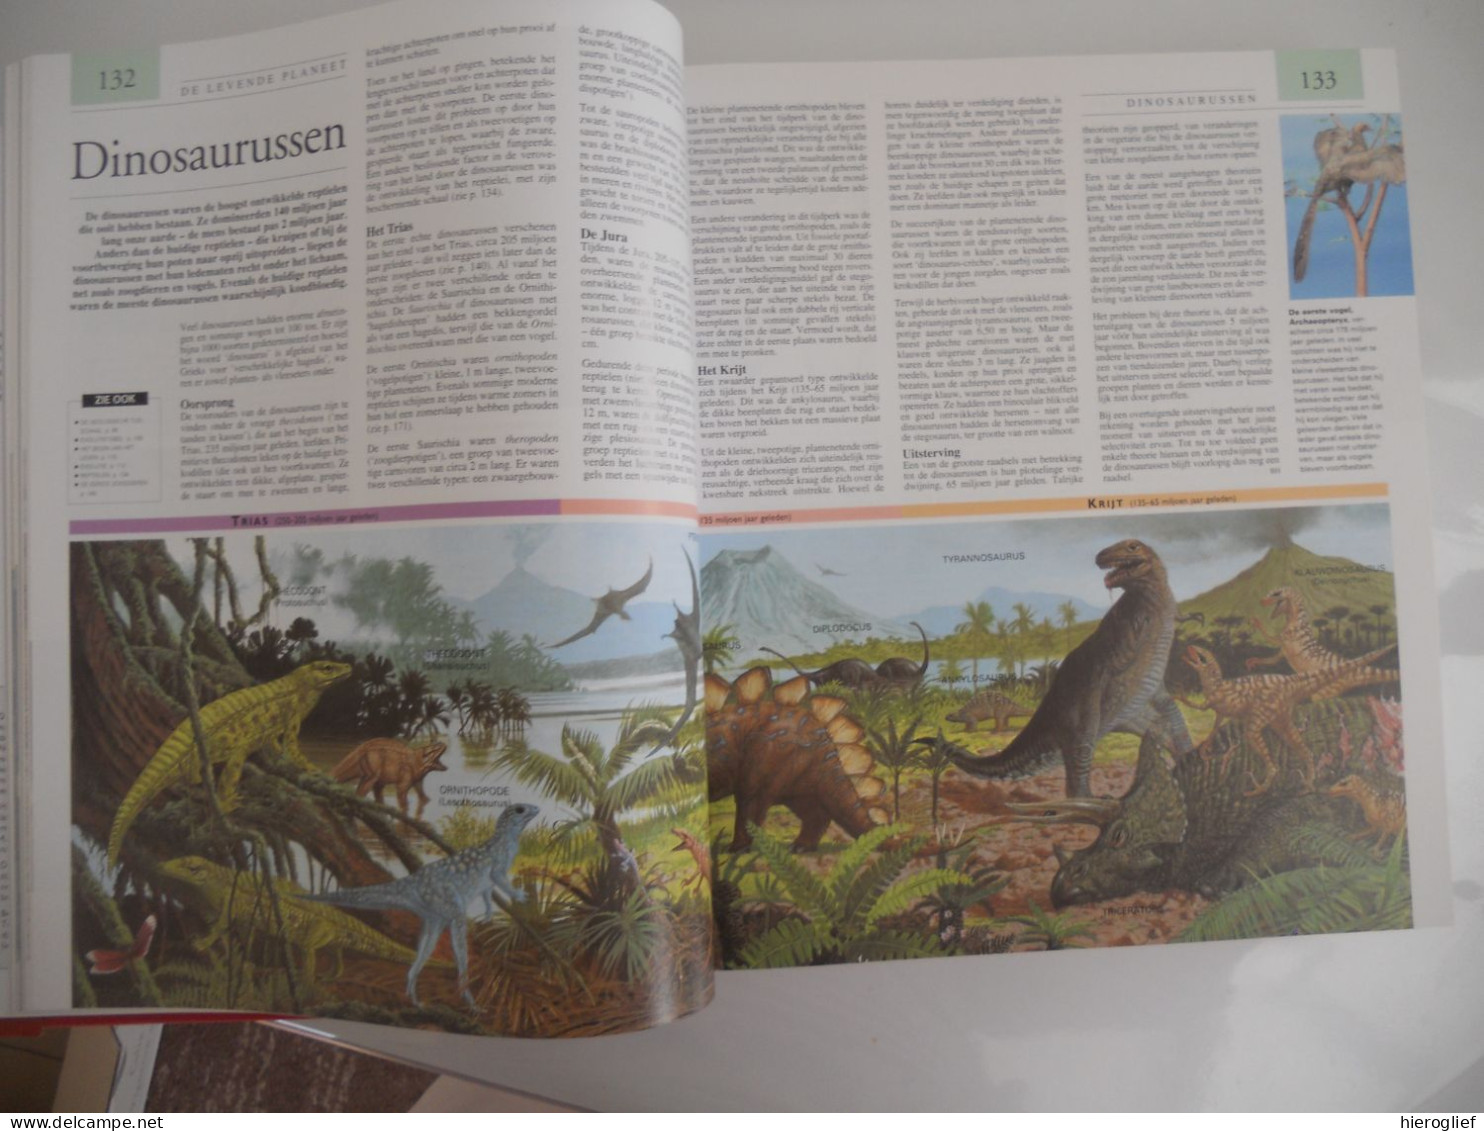 Atrium encyclopedie - originated bij Guiness geschiedenis oorlog kunst fauna flora dans muziek architectuur geografie